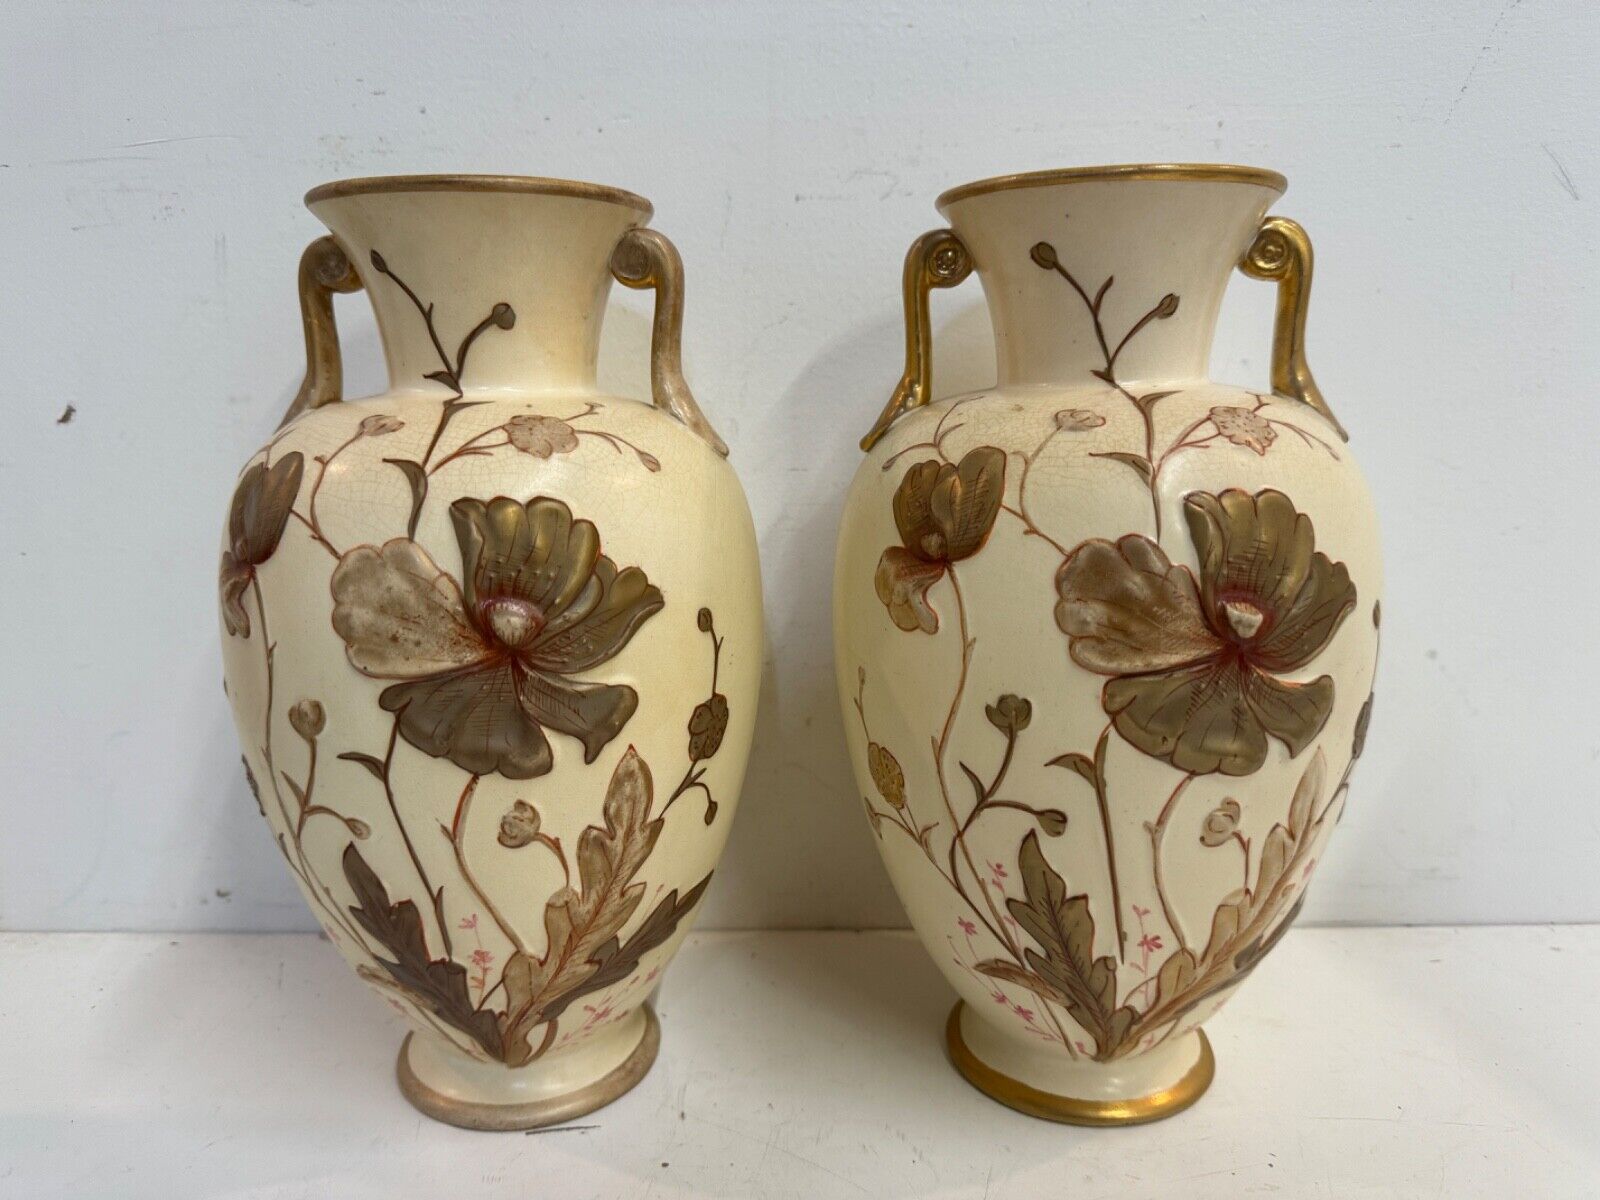 Antique Royal Devon England Porcelain Pair of Vases with Raised Gold Flowers Dec